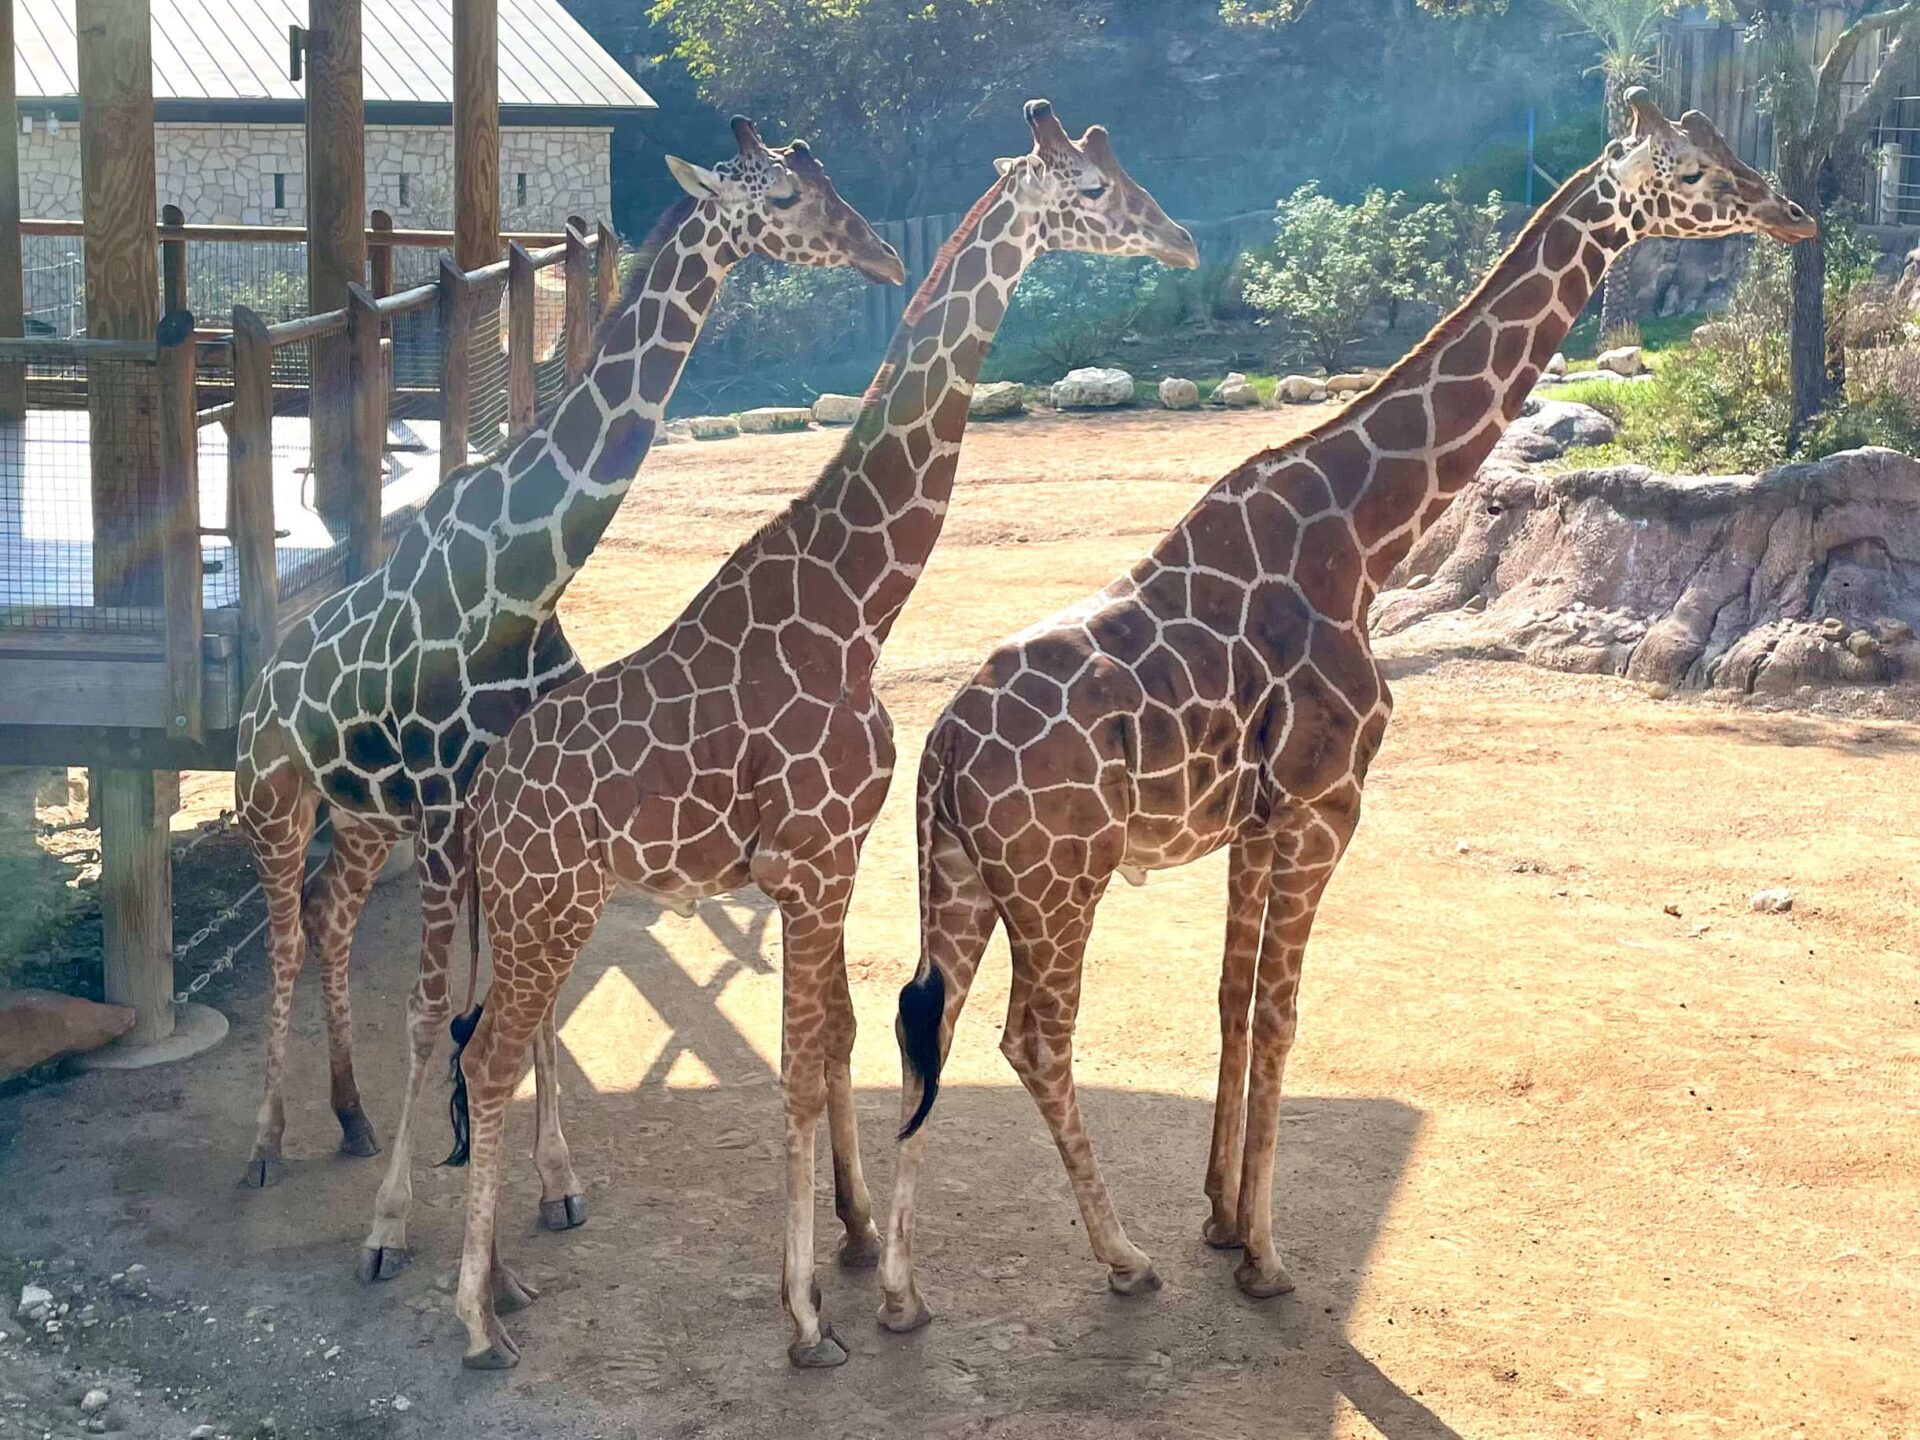 Three giraffes across the Savannah